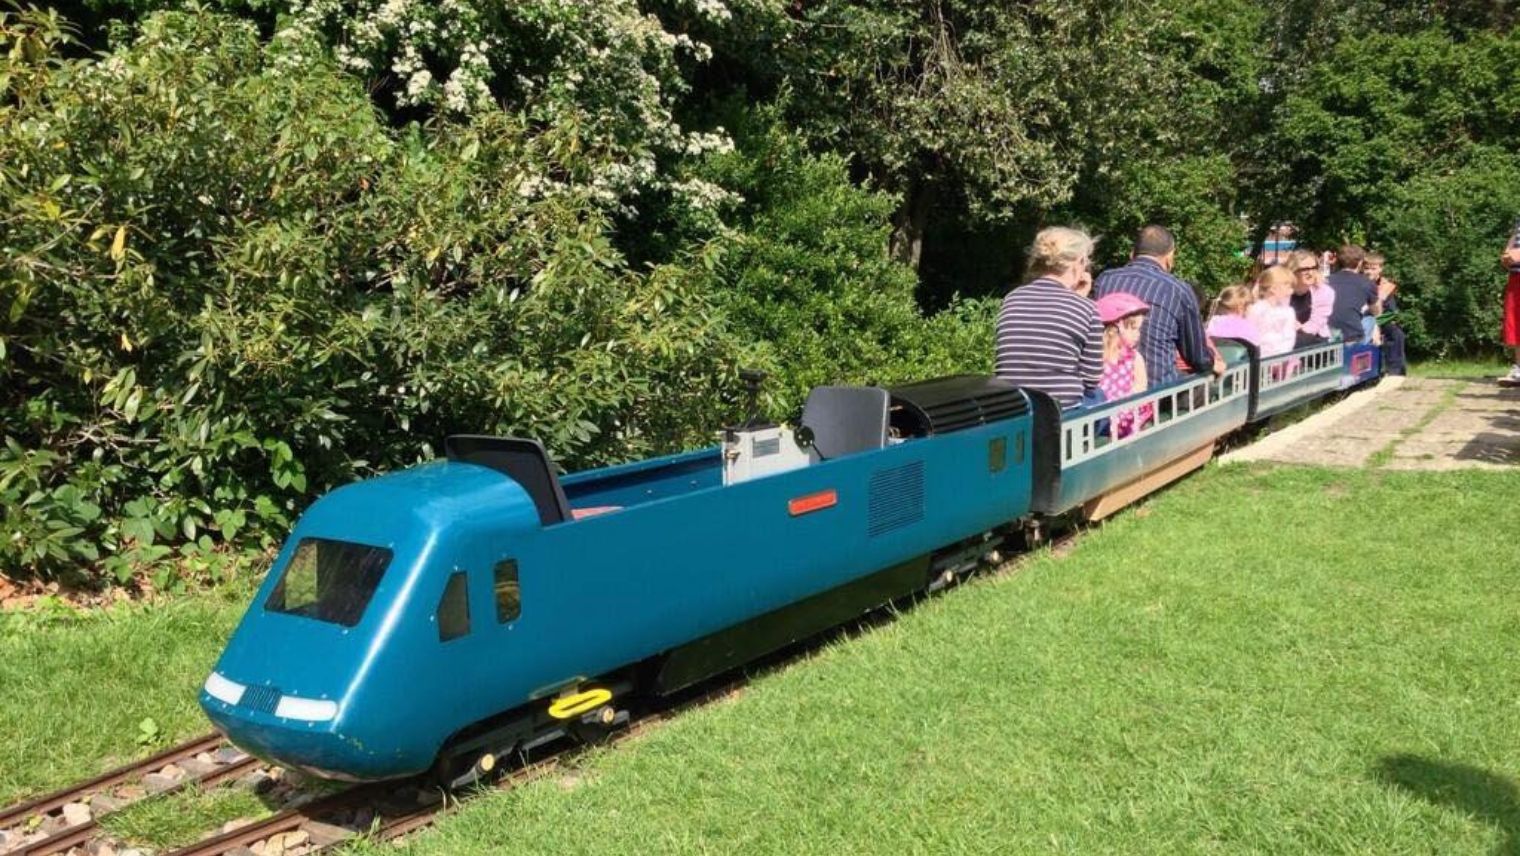 A miniature train at Brockwell Park miniature railway